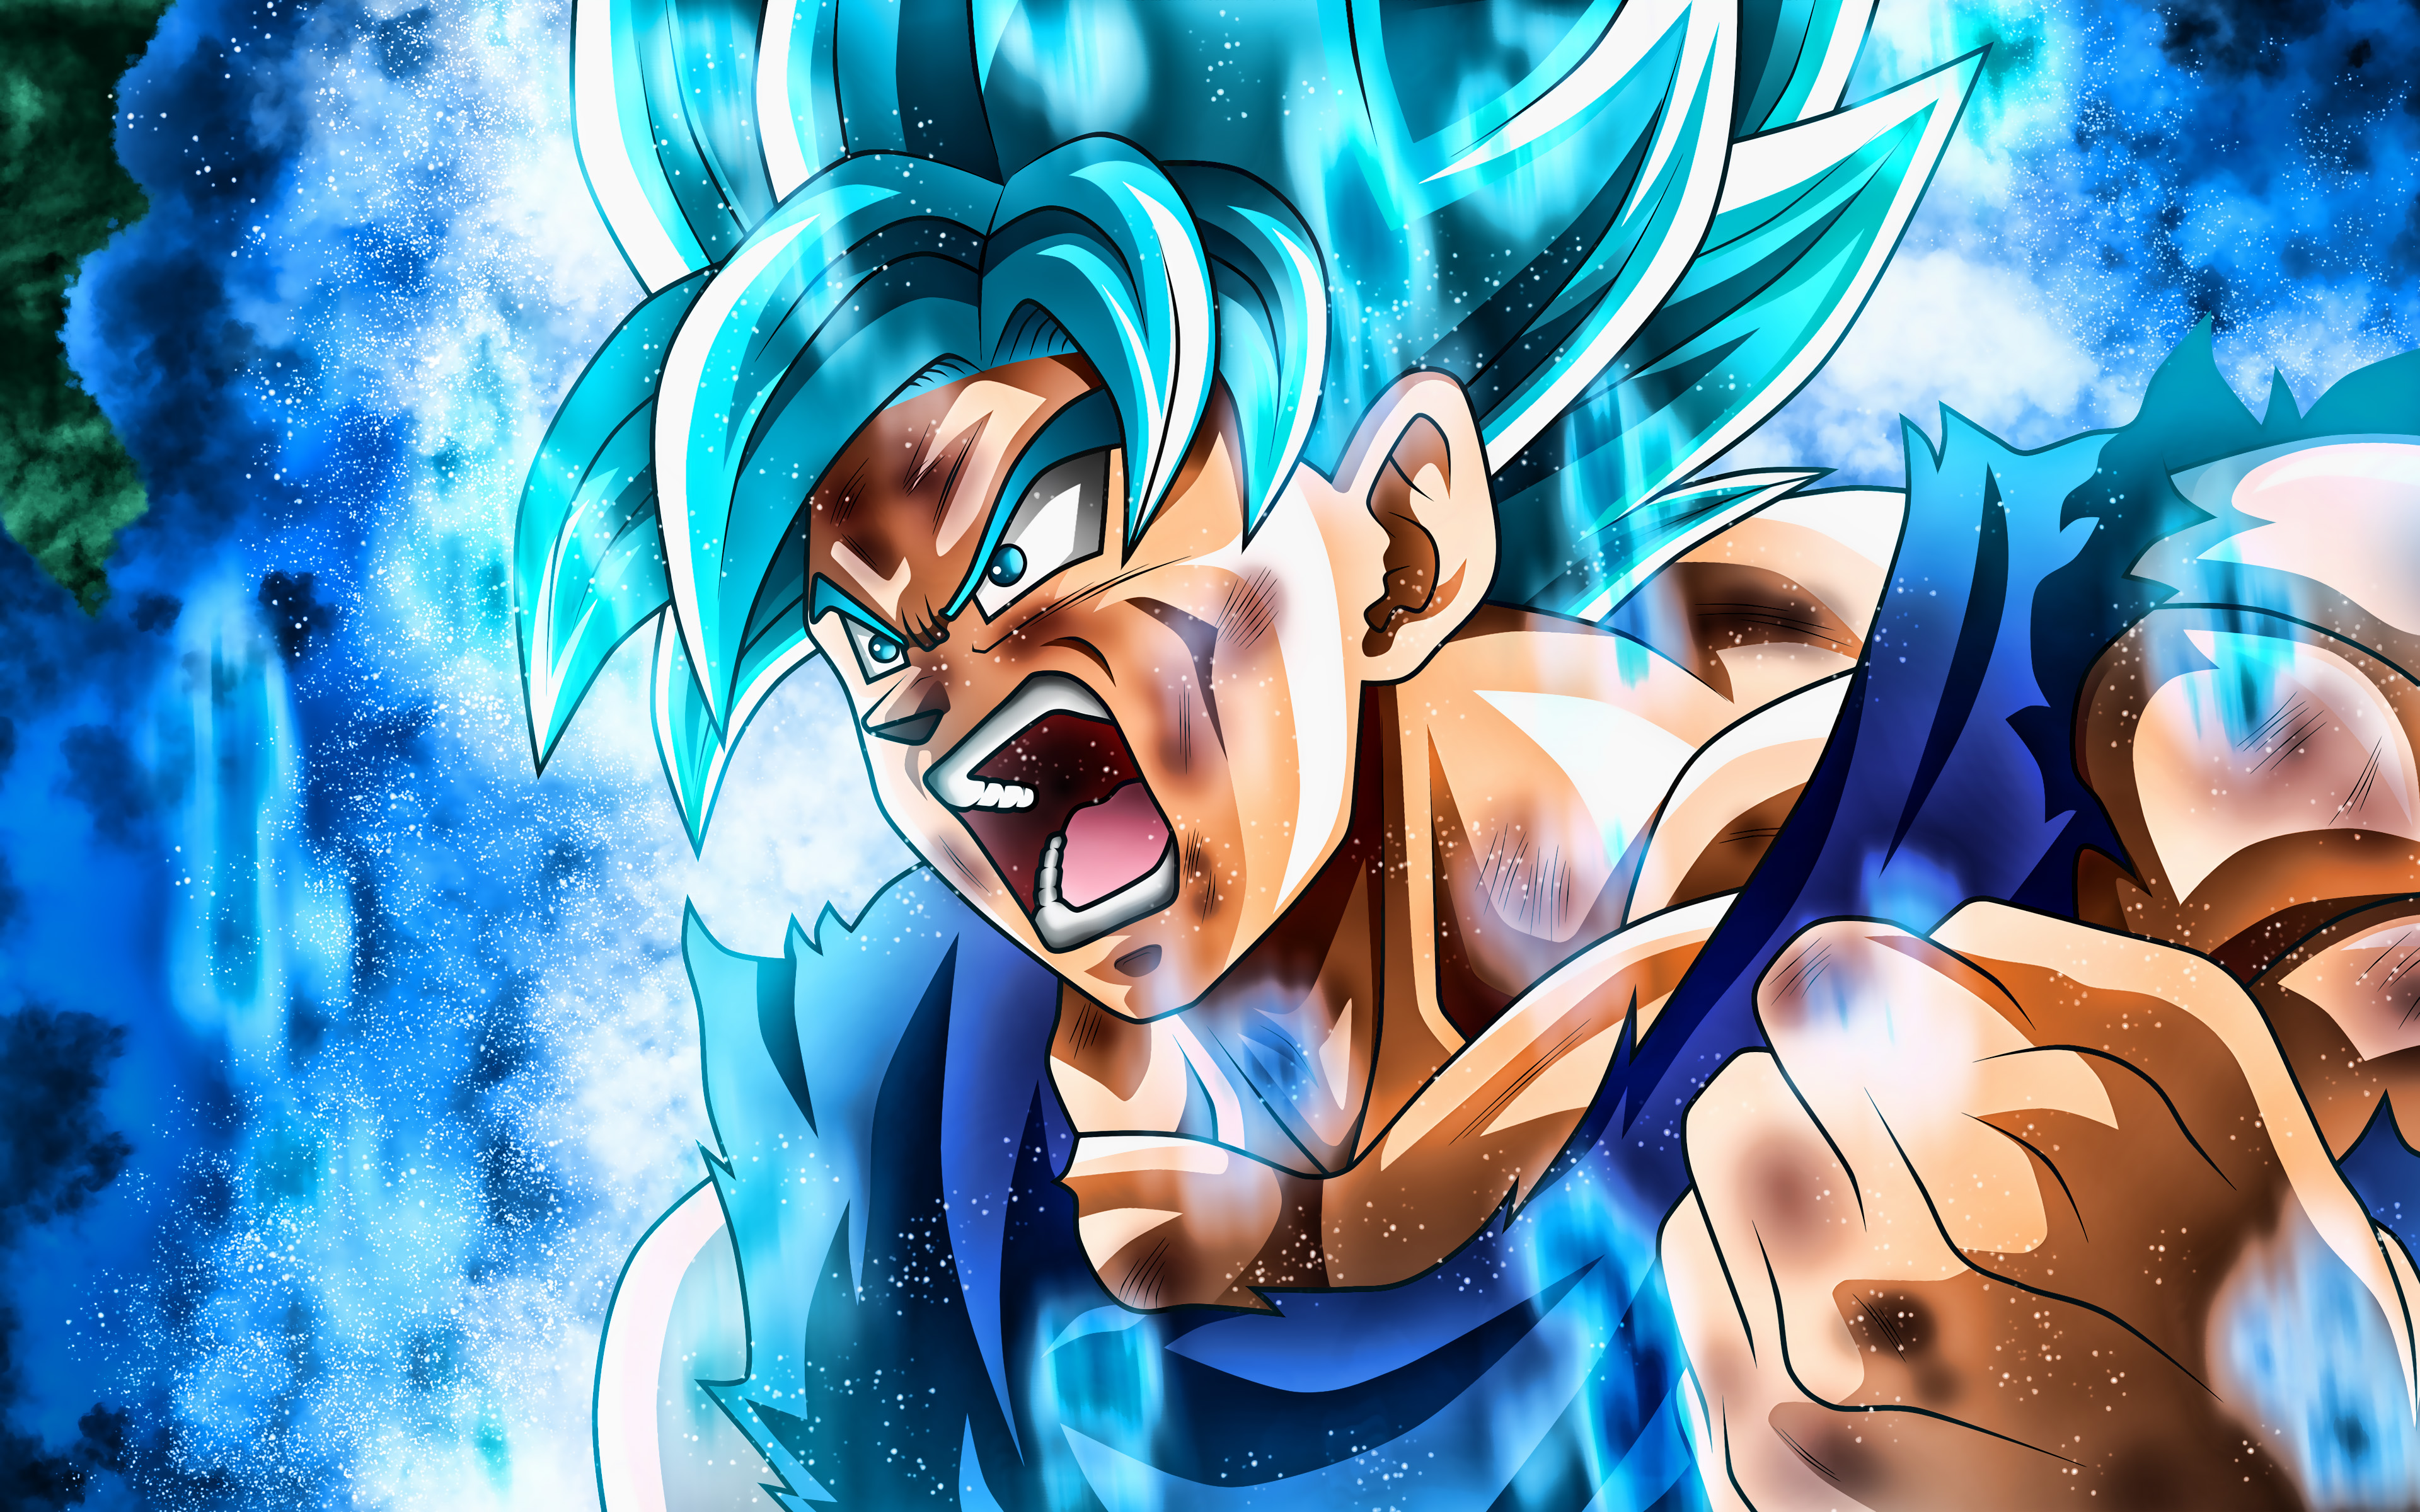 Goku Super Saiyan Blue from Dragon Ball Super Anime Wallpaper 8k Ultra HD  ID:3737